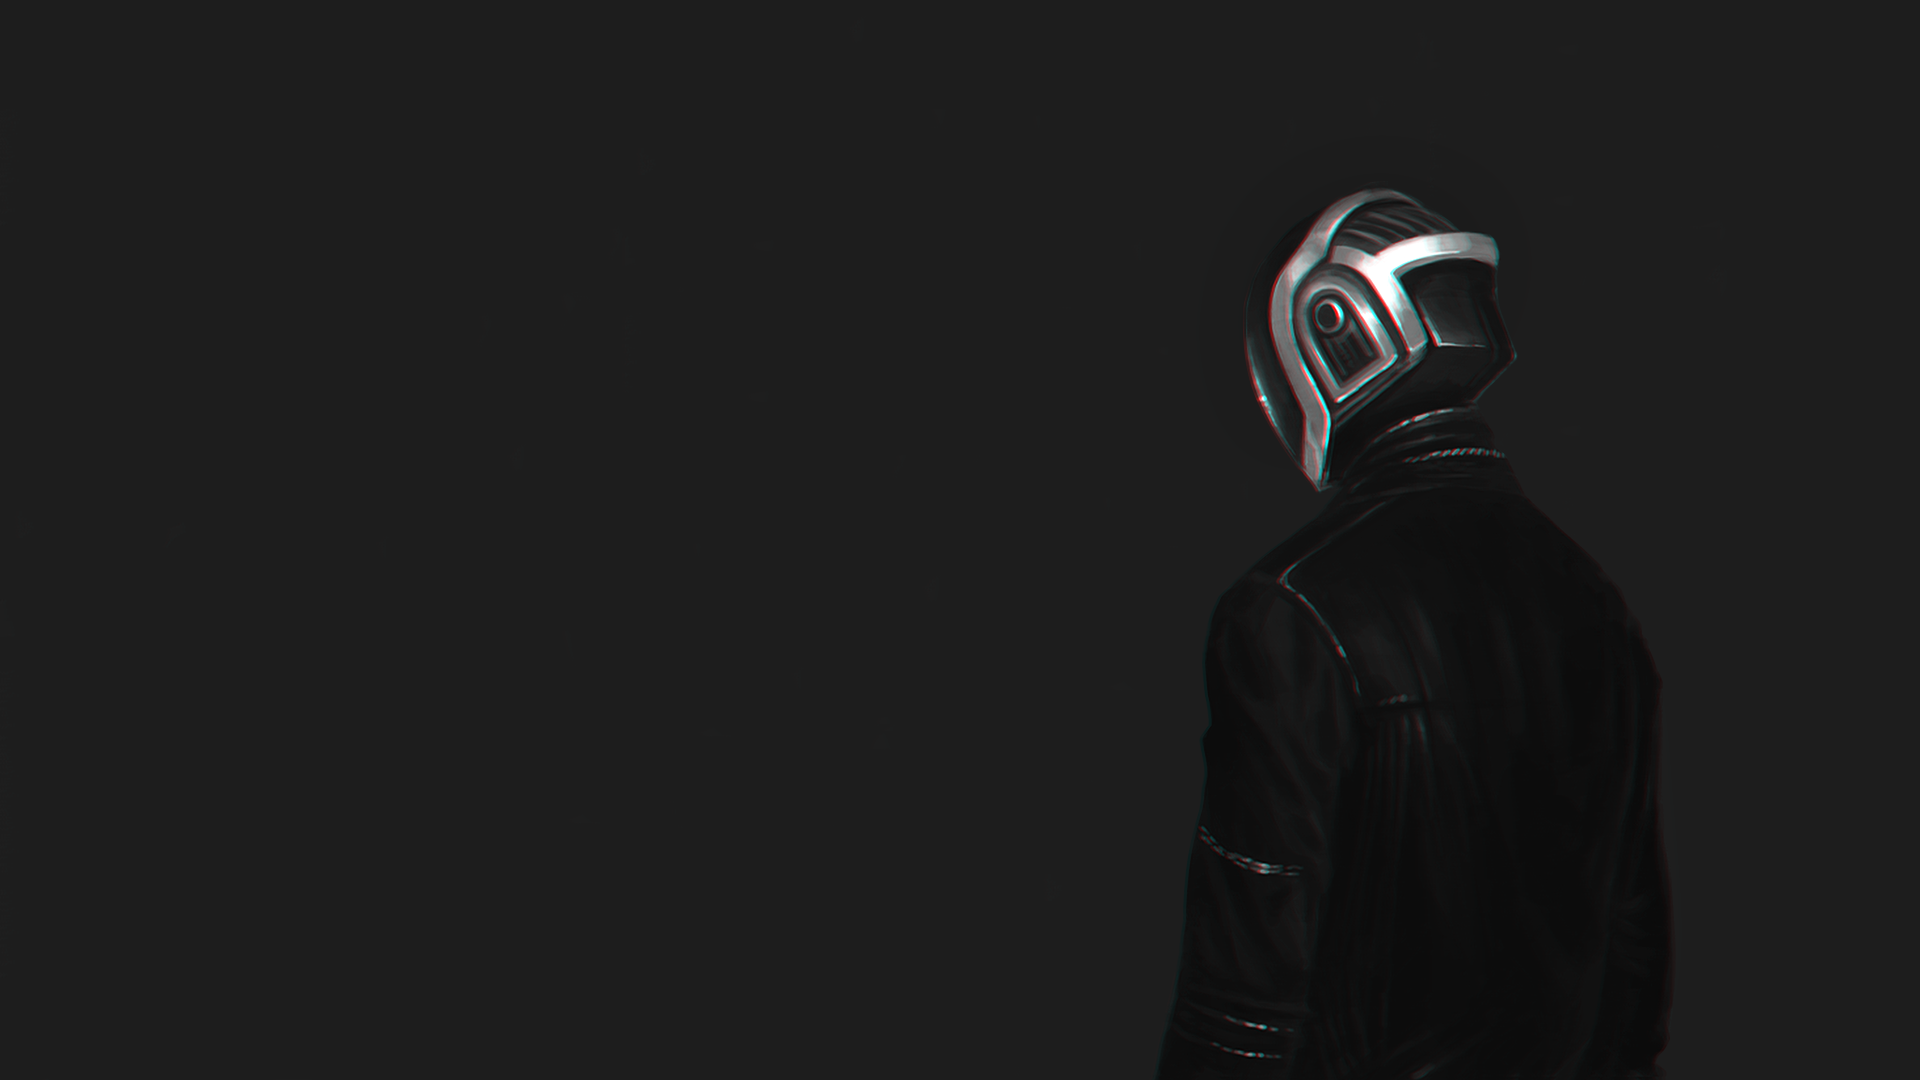 General 1920x1080 Daft Punk chromatic aberration simple background jacket electronic music music monochrome black background DJ